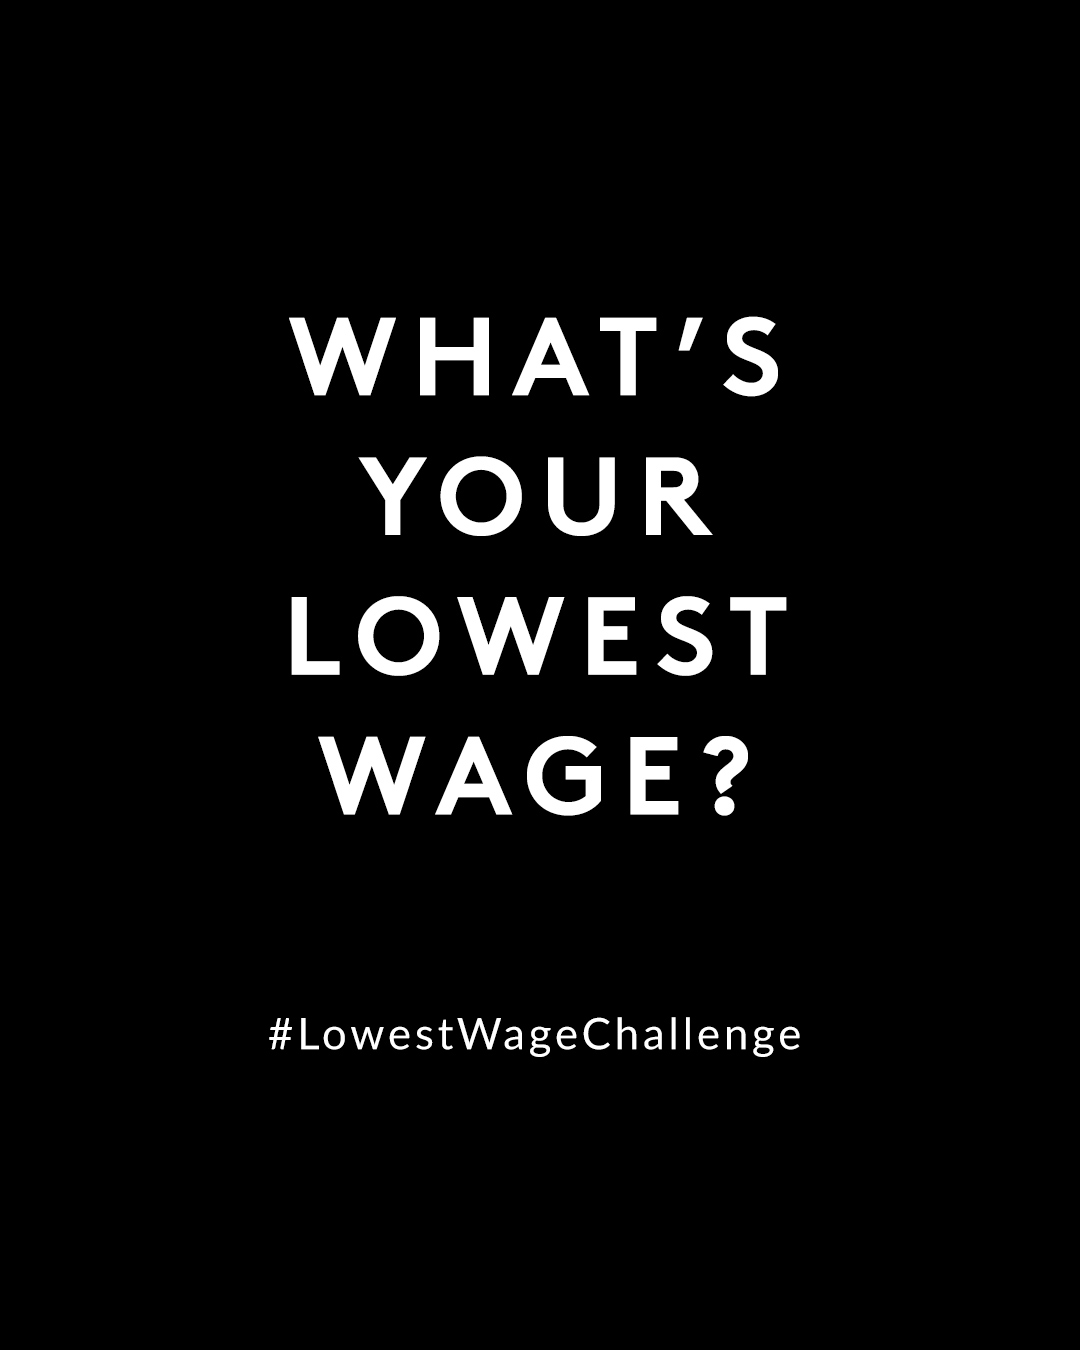 SNSで衣服労働者の環境改善へ「#LowestWageChallenge」